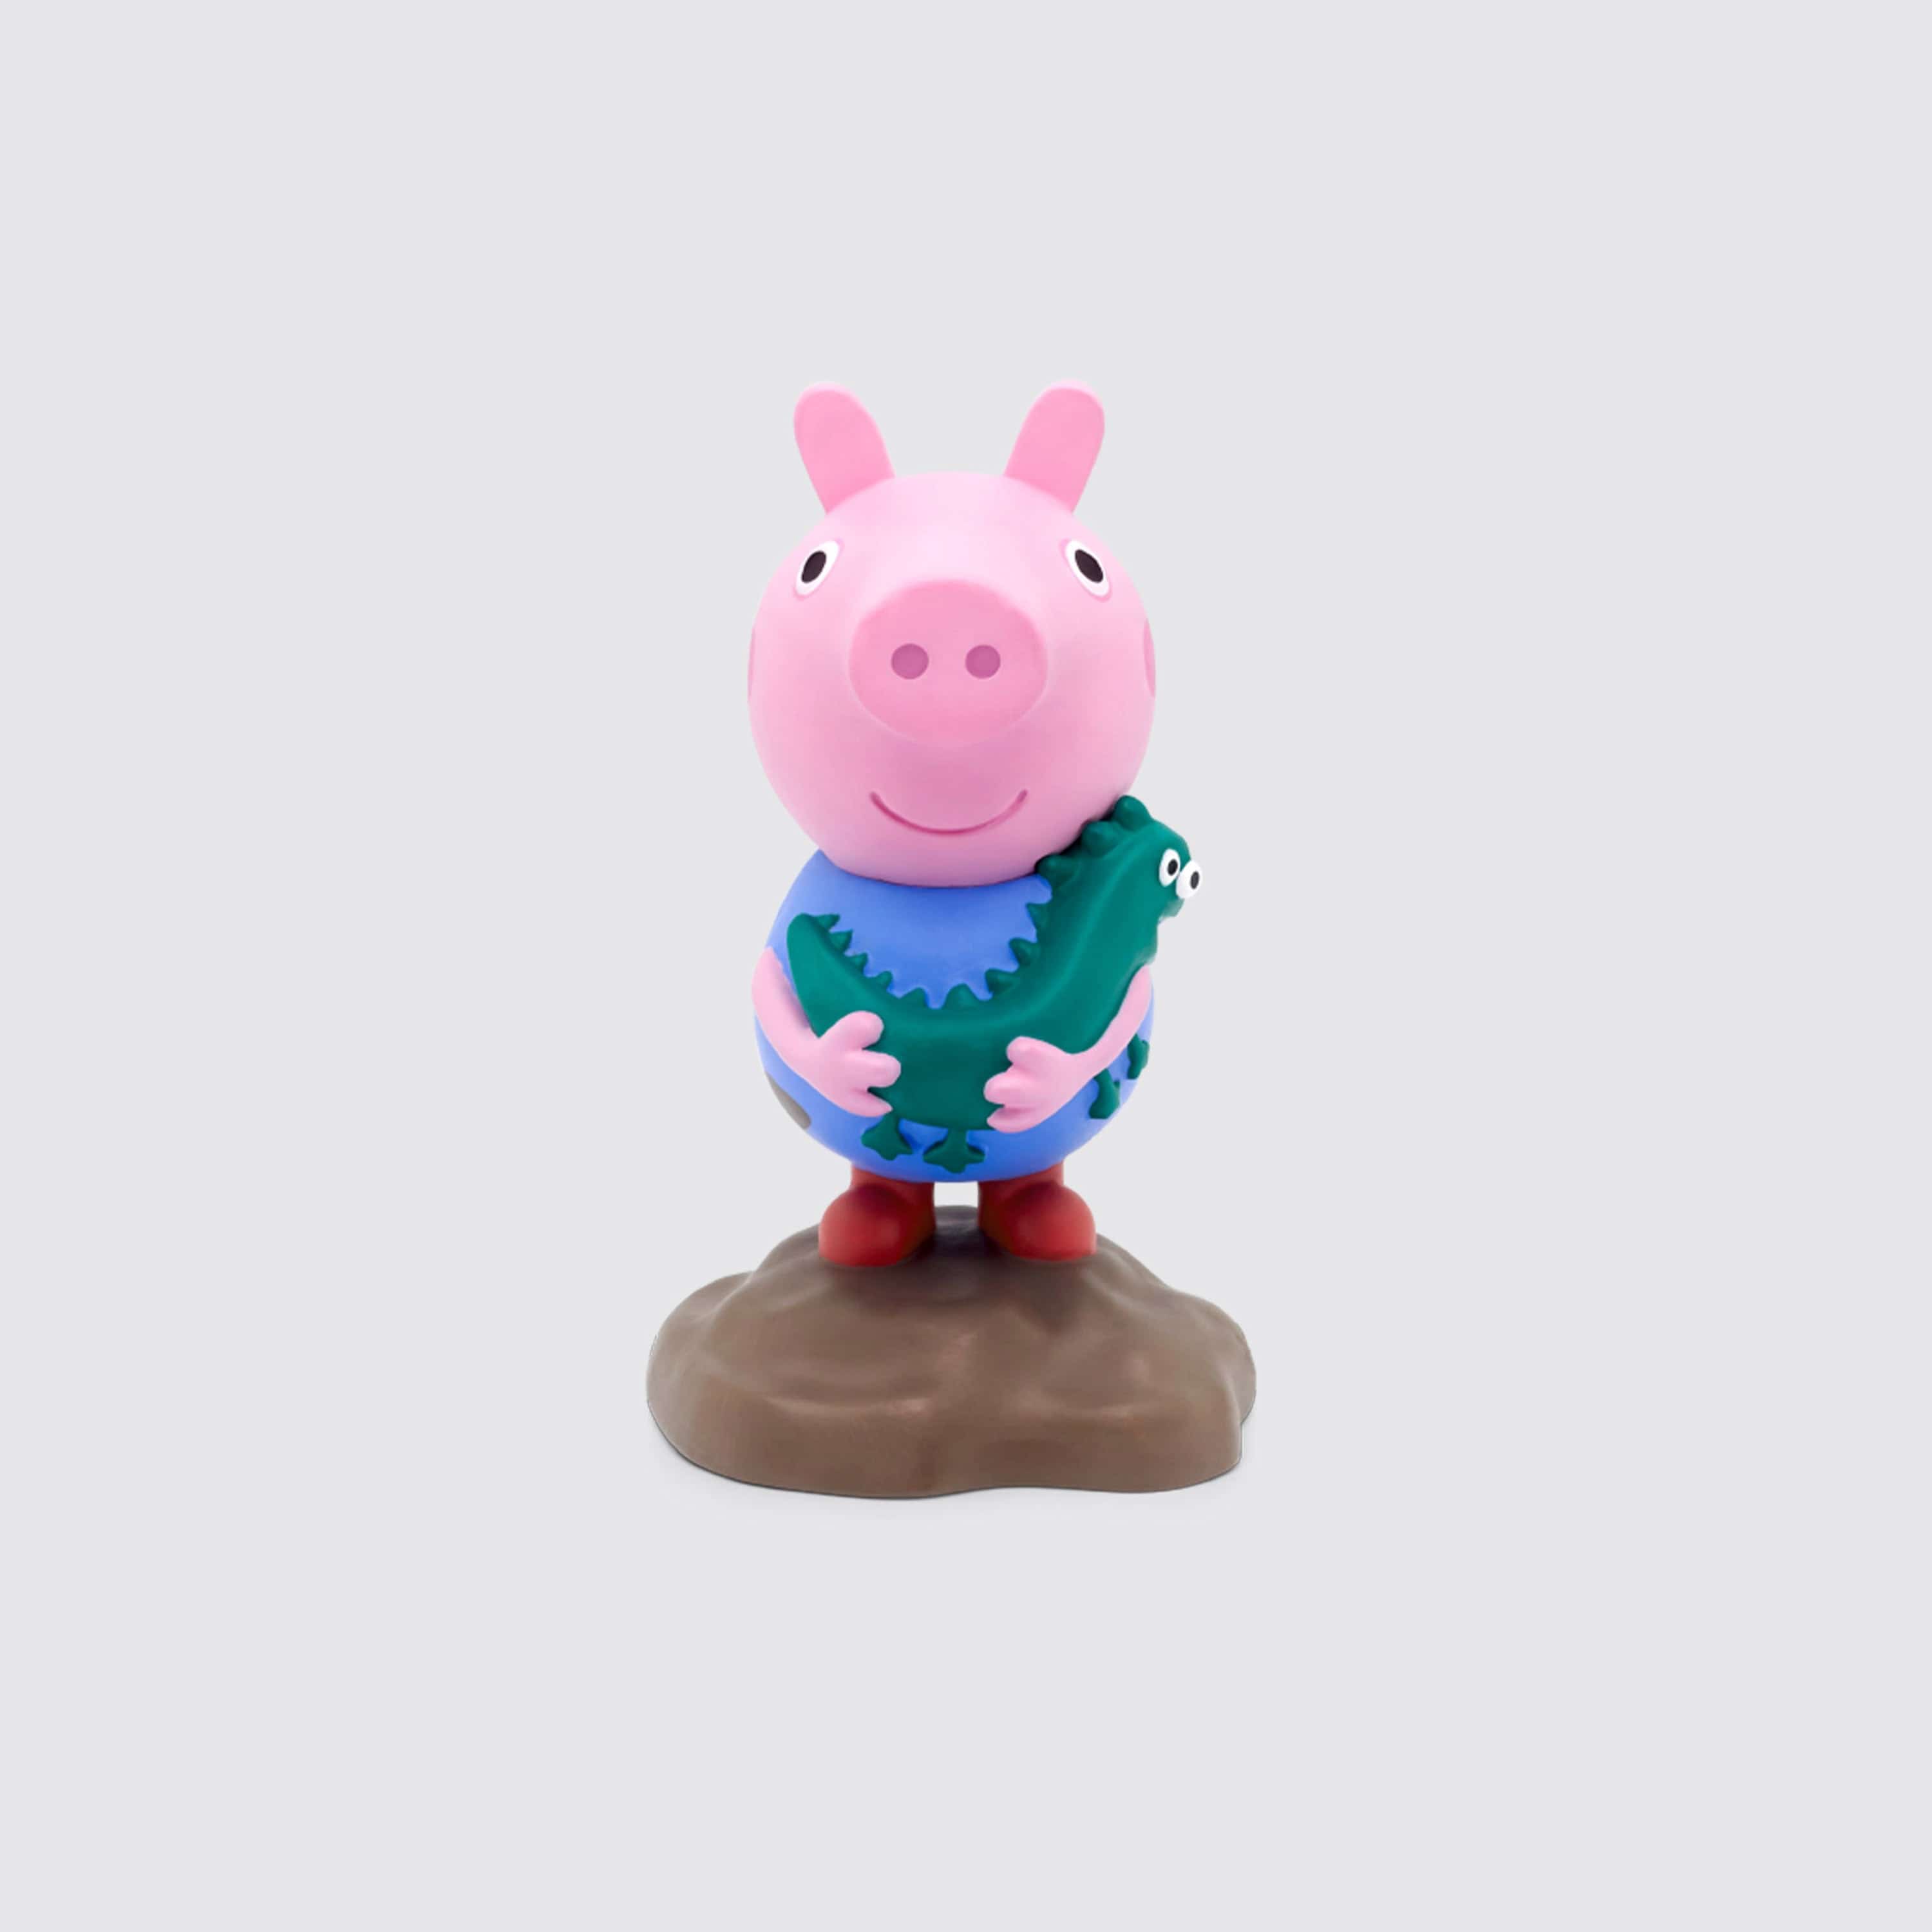 Miniature Pig Figures 8 Pieces, Adorable Pink Piggy Toy Figure